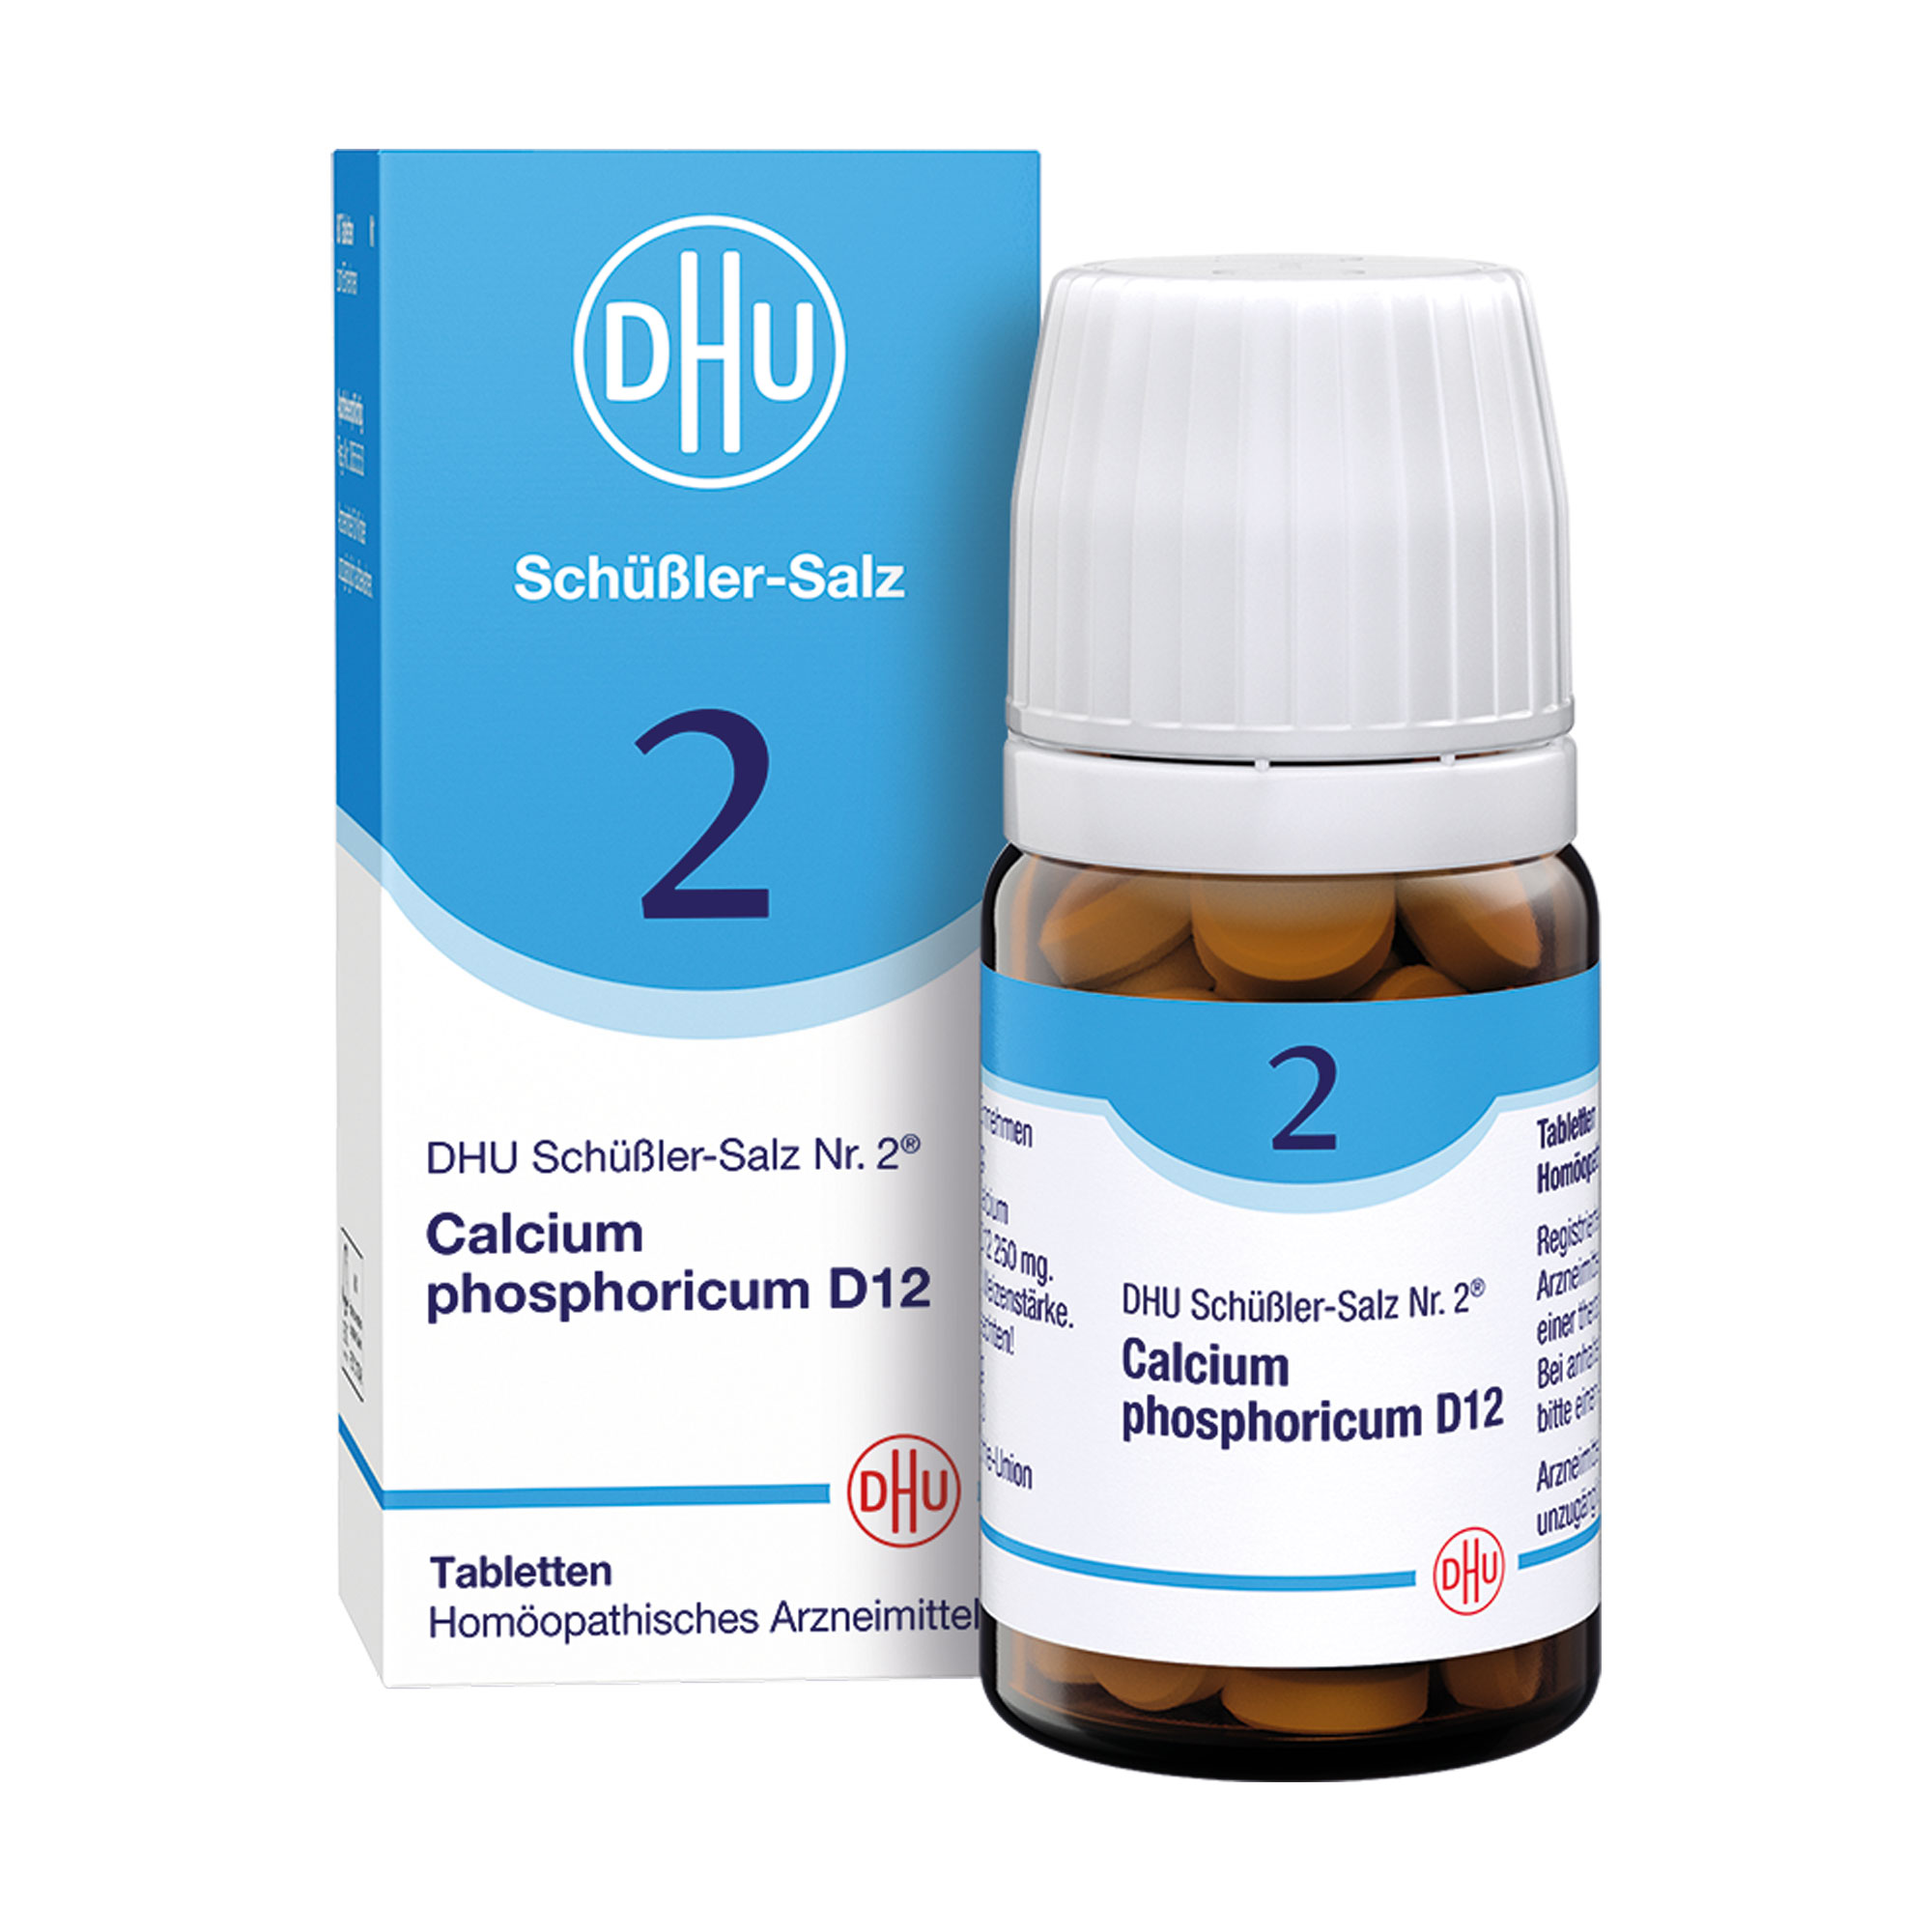 Homöopathisches Arzneimittel mit Calcium phosphoricum Trit. D12.